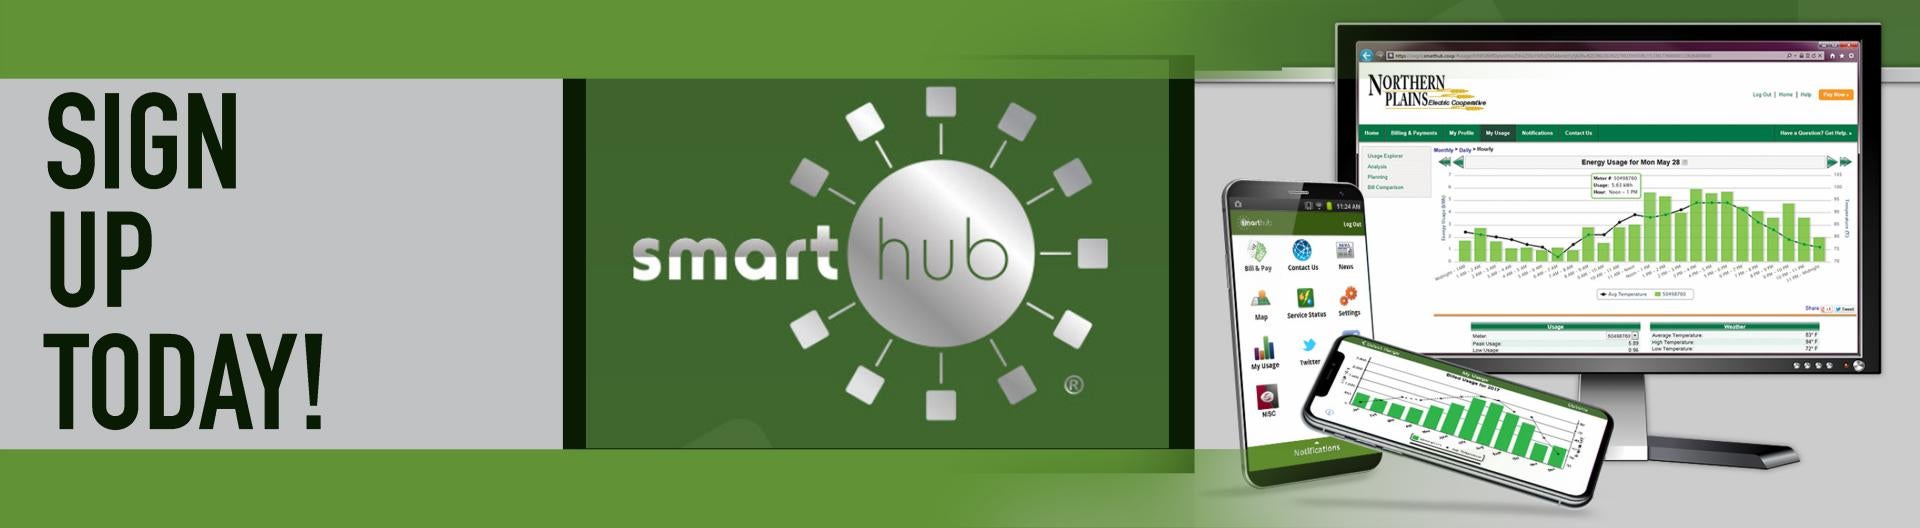 Sign up for SmartHub